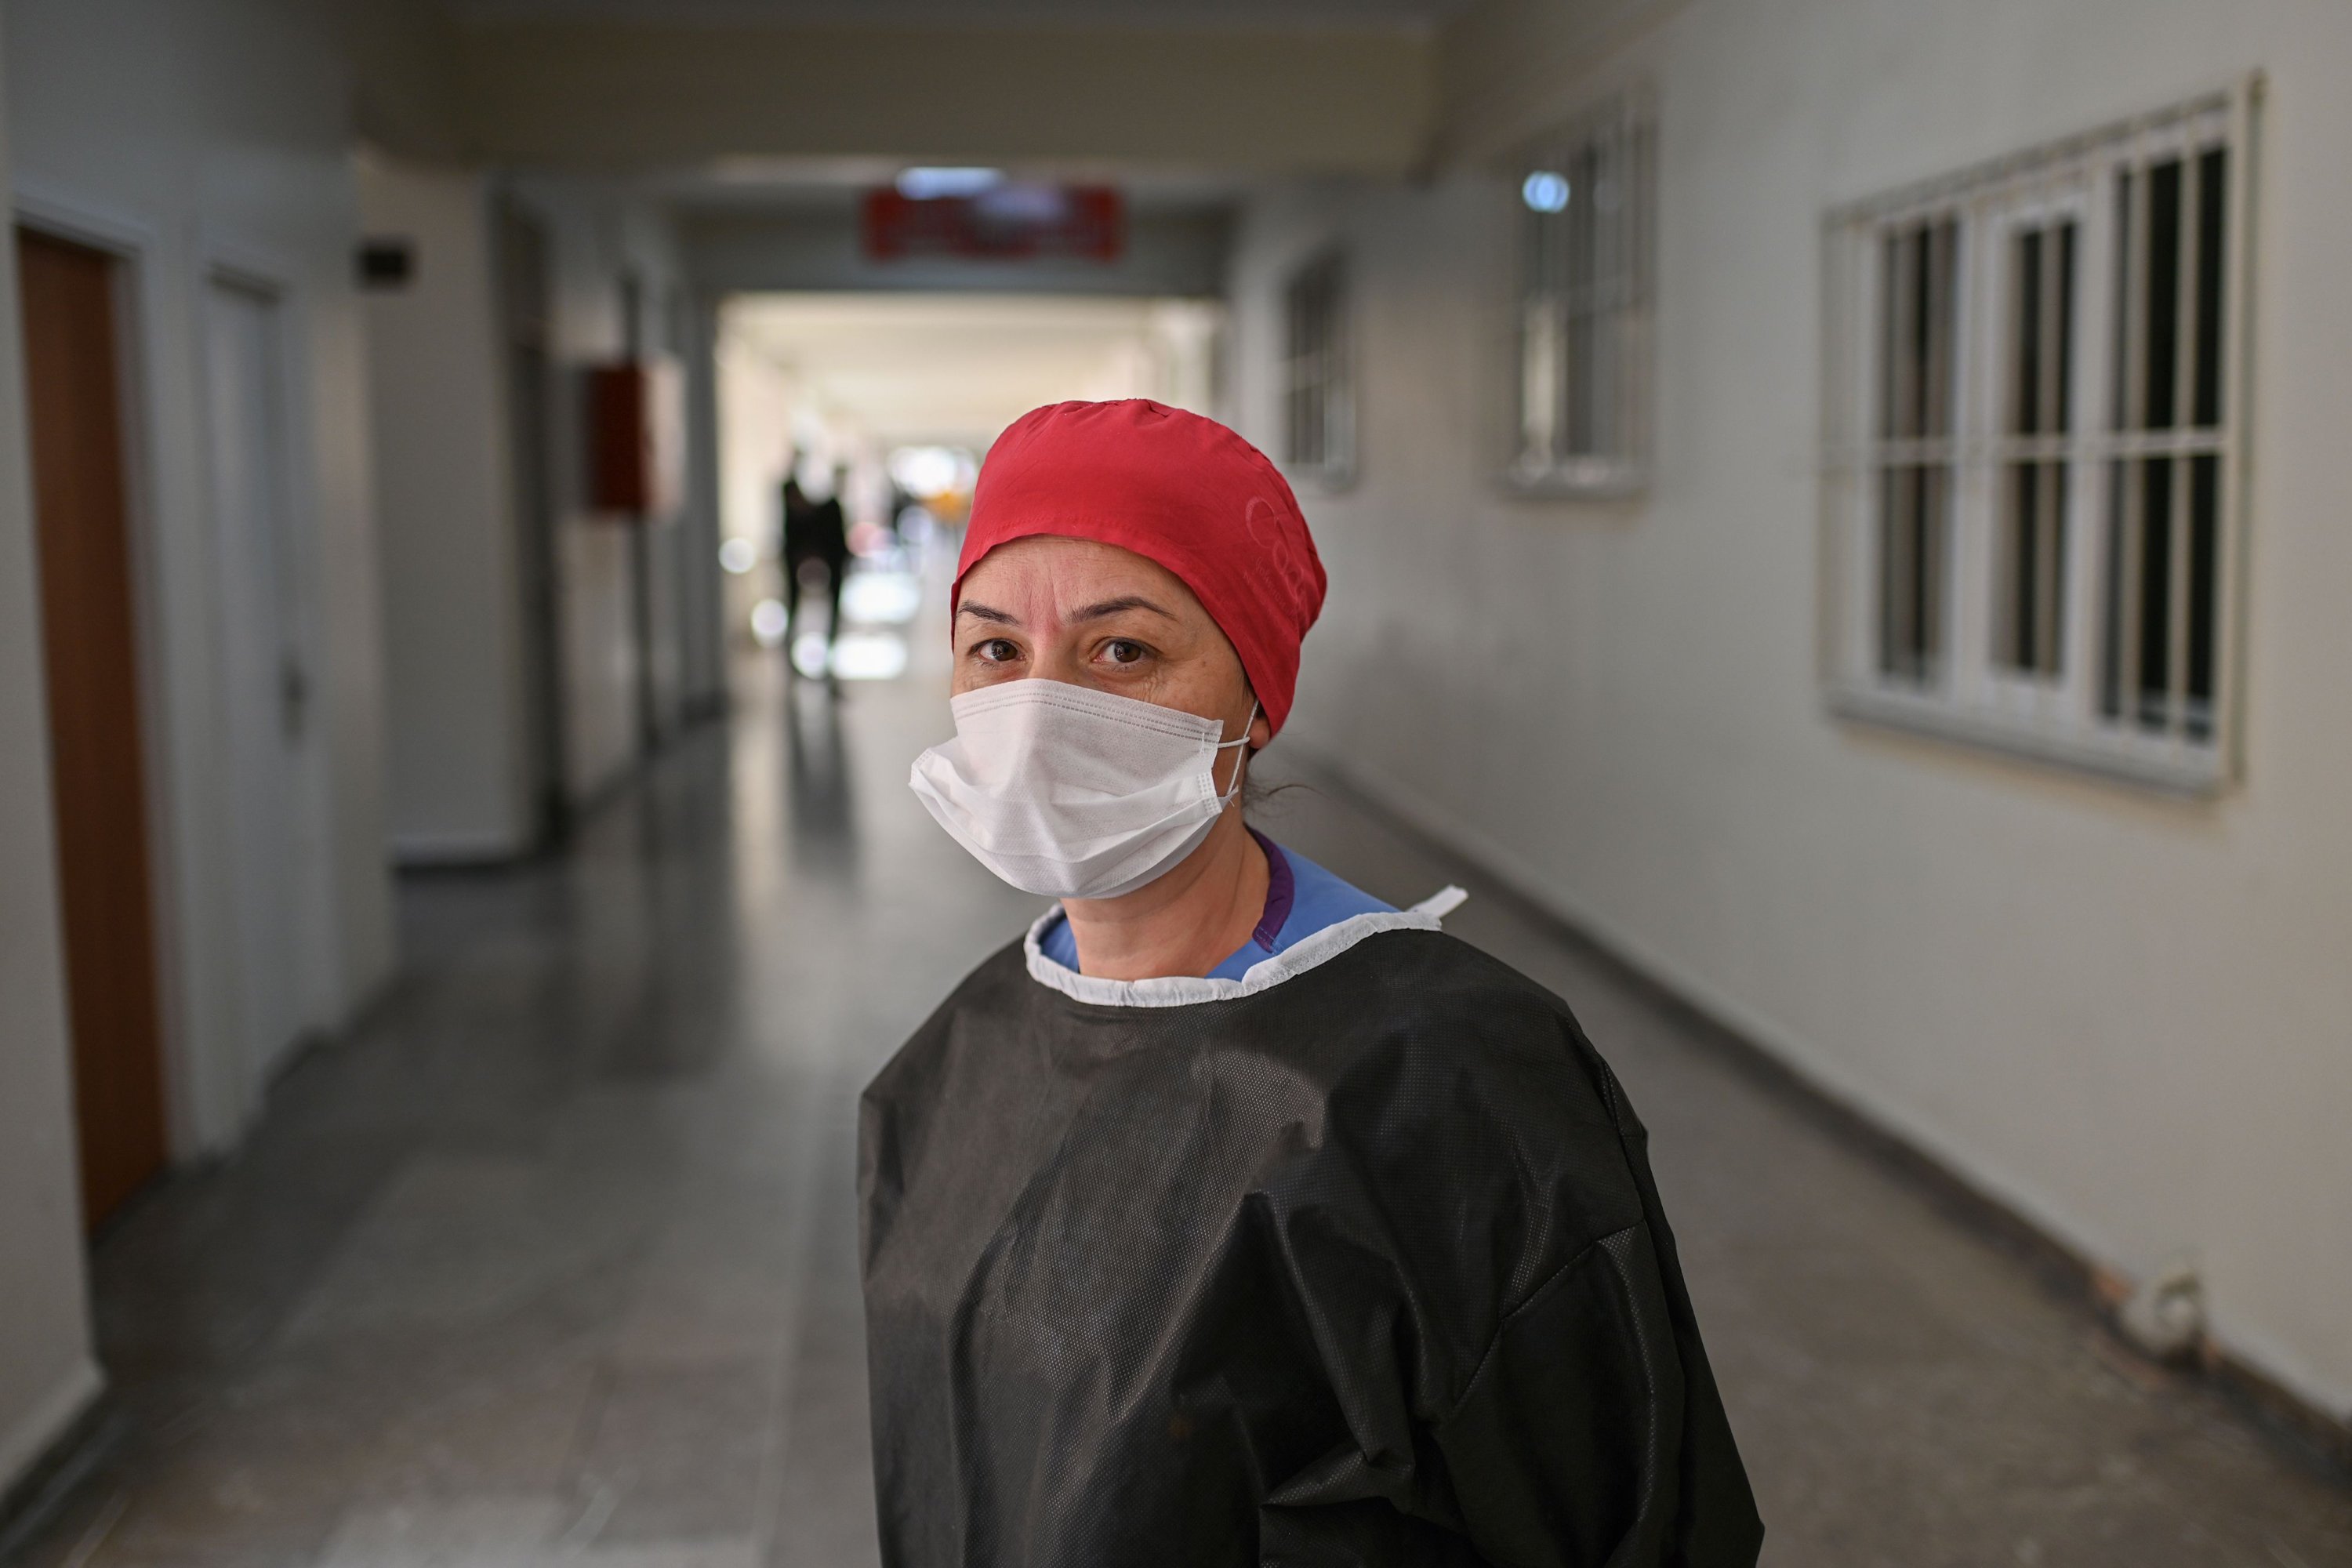 Merve Pirecioğlu, head nurse who treats COVID-19 patients, poses during an interview.